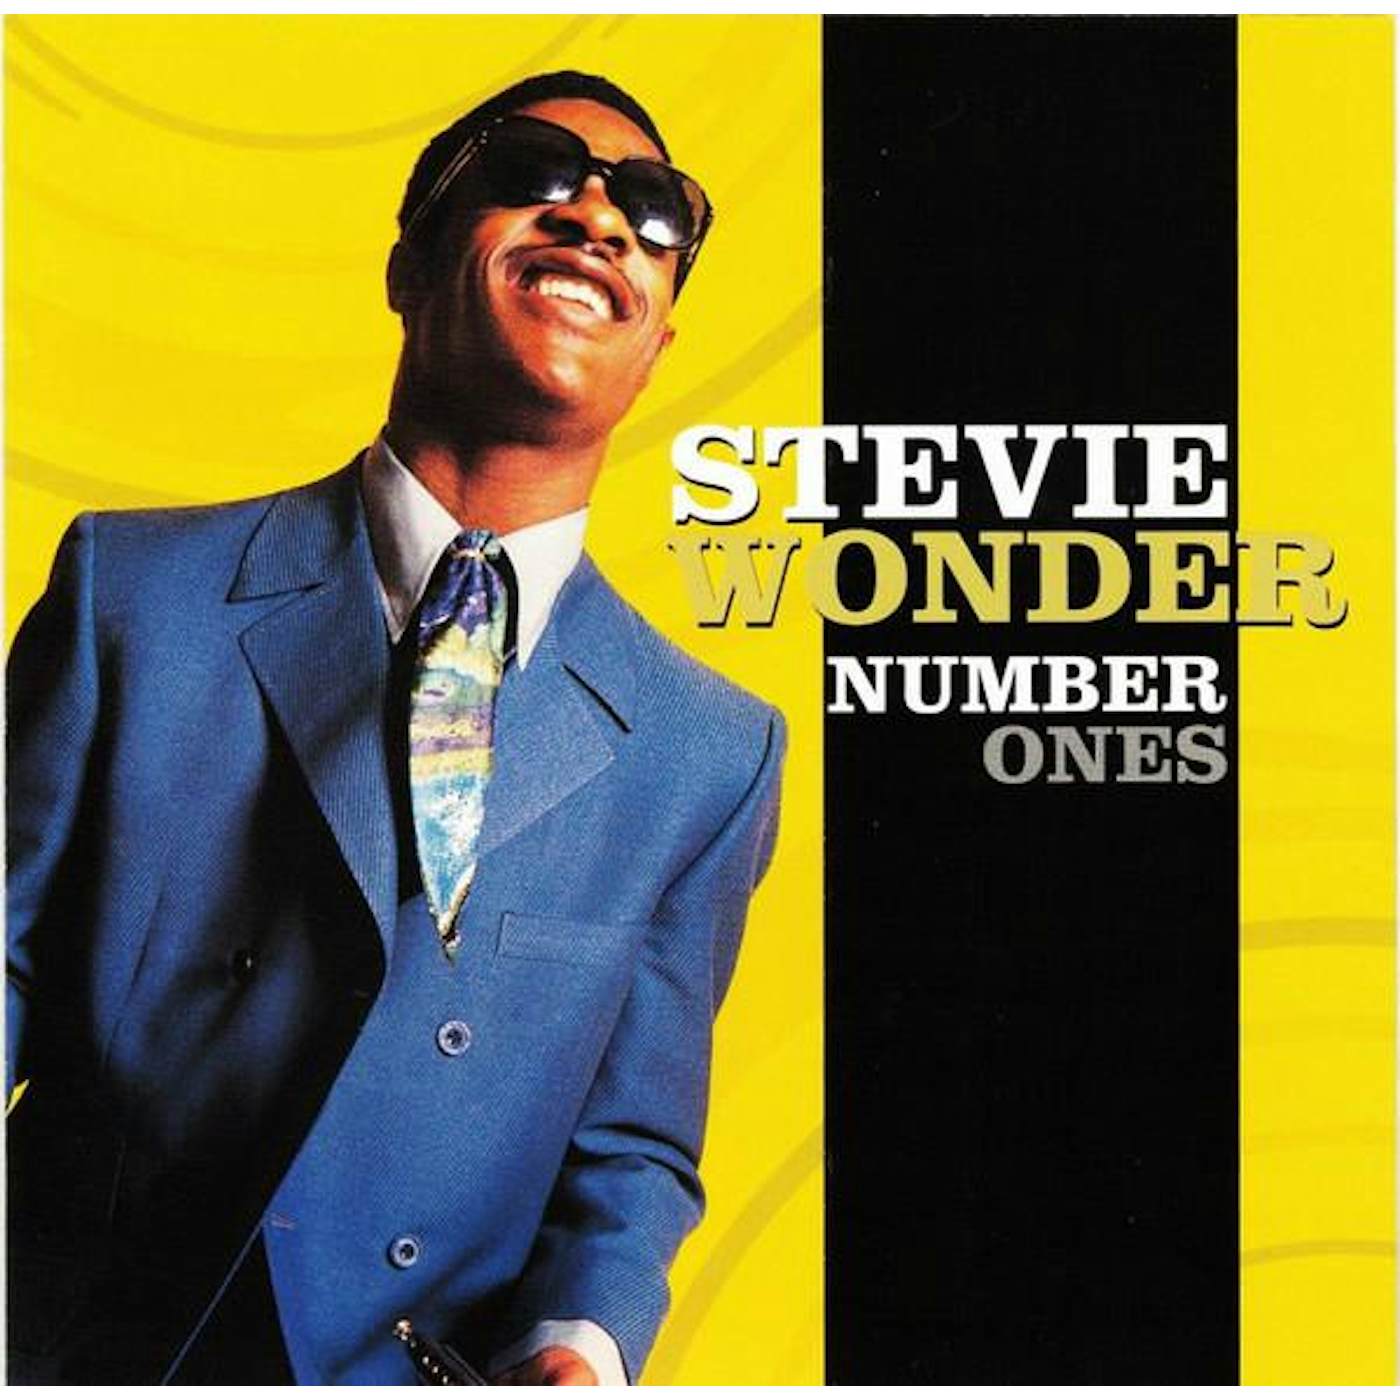 Stevie Wonder NUMBER 1S CD